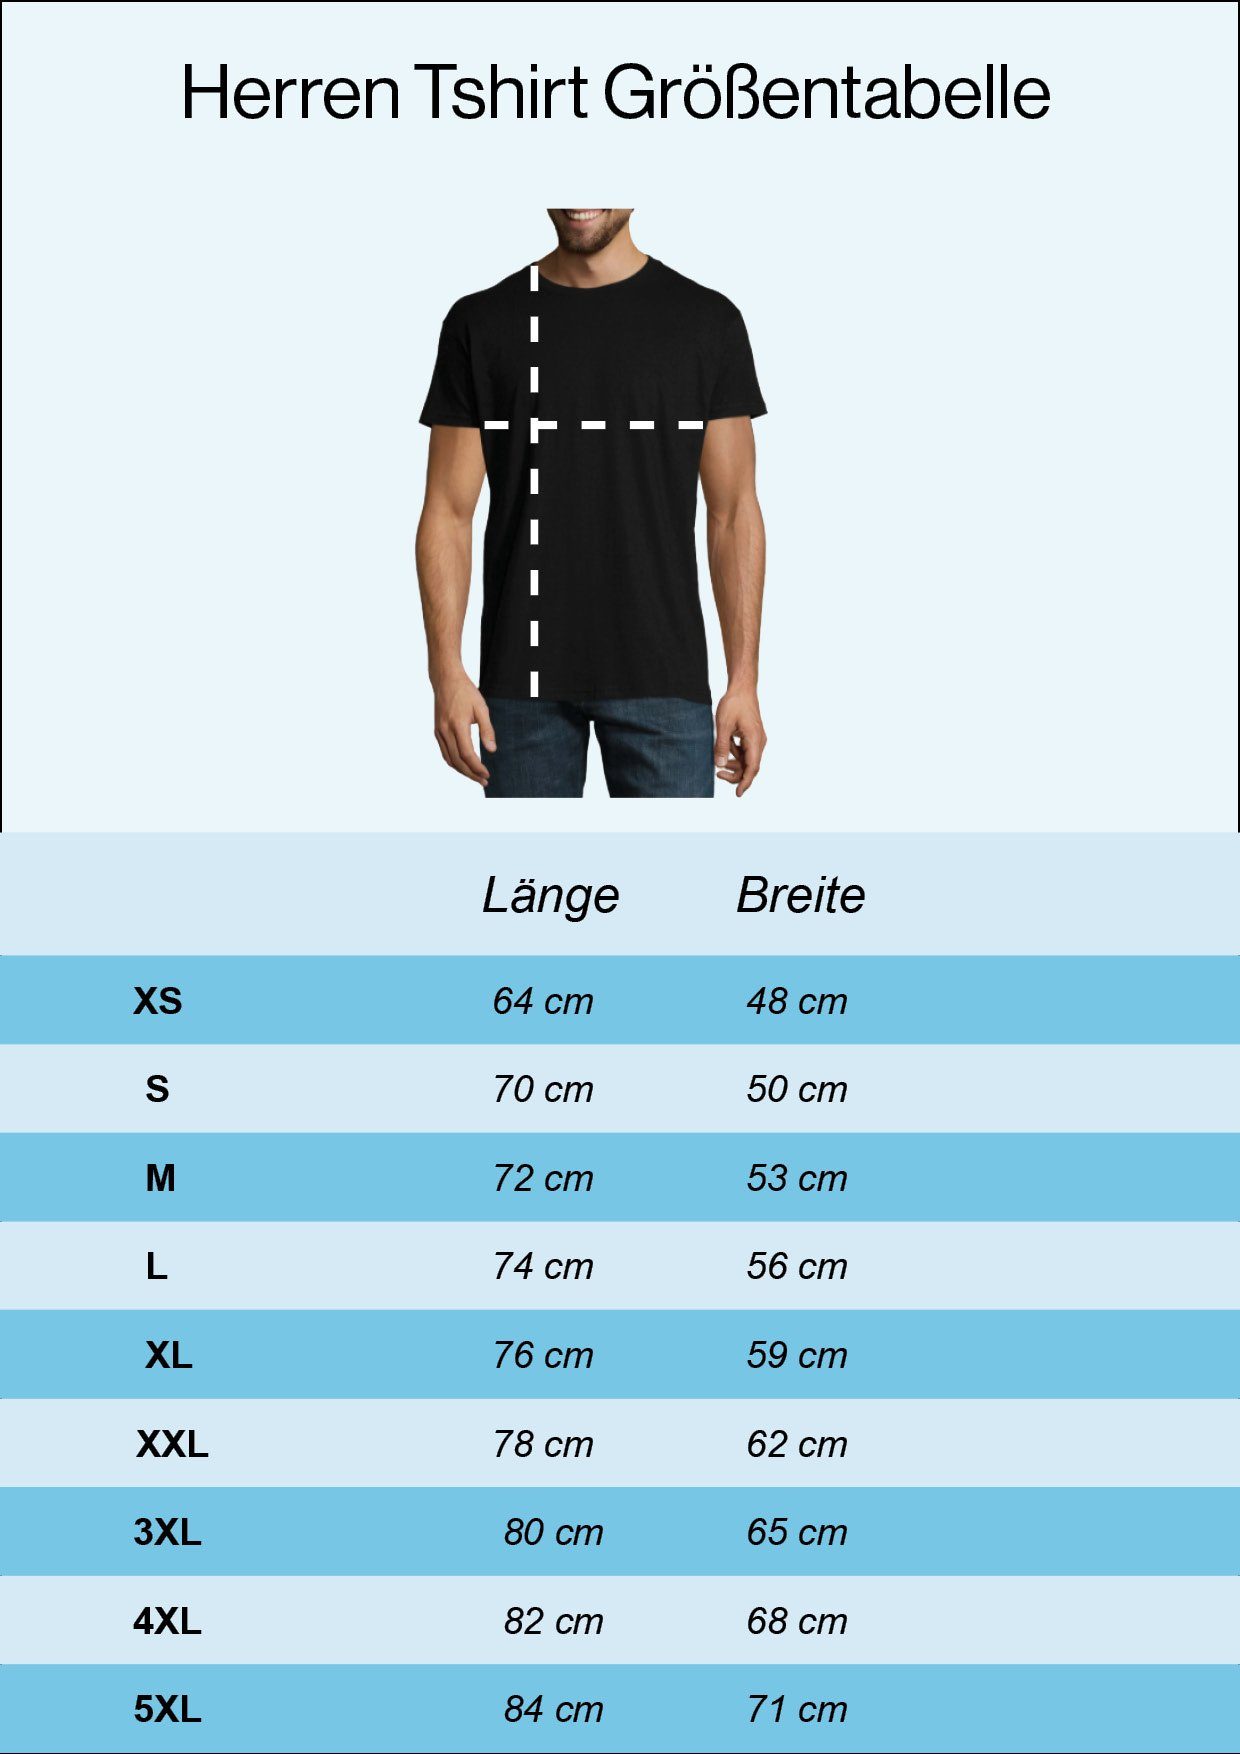 Youth Designz T-Shirt Every Burgund Workout Herren Gym Fun-Look Faultier im Counts Shirt